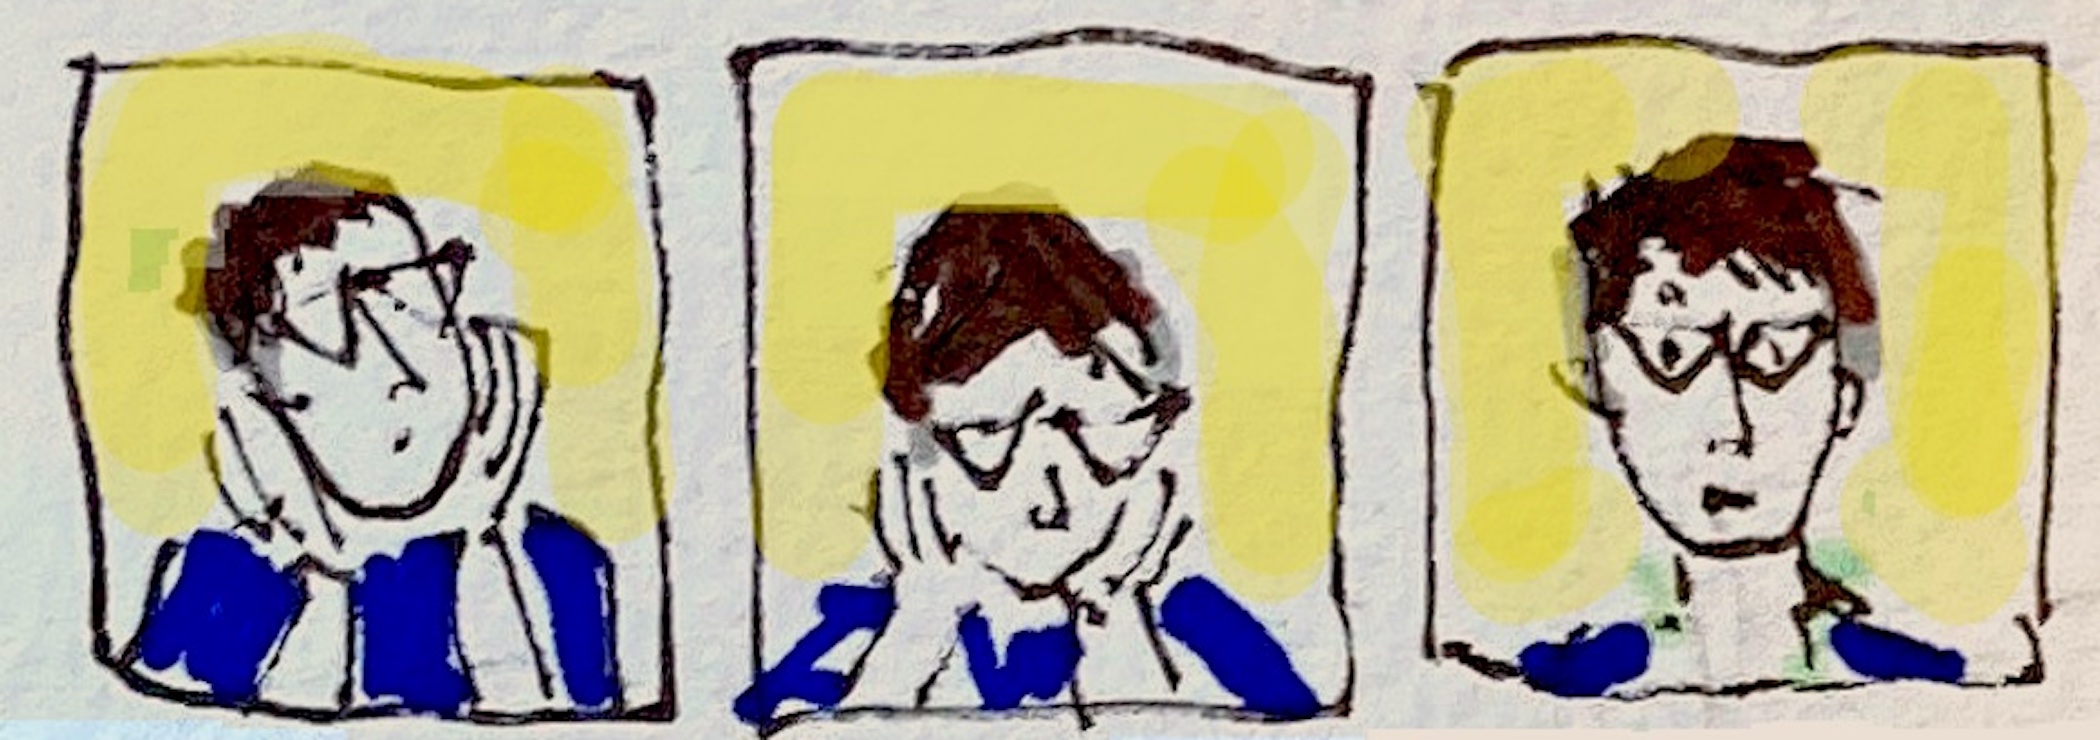 Three panel illustration of speccy man thinking